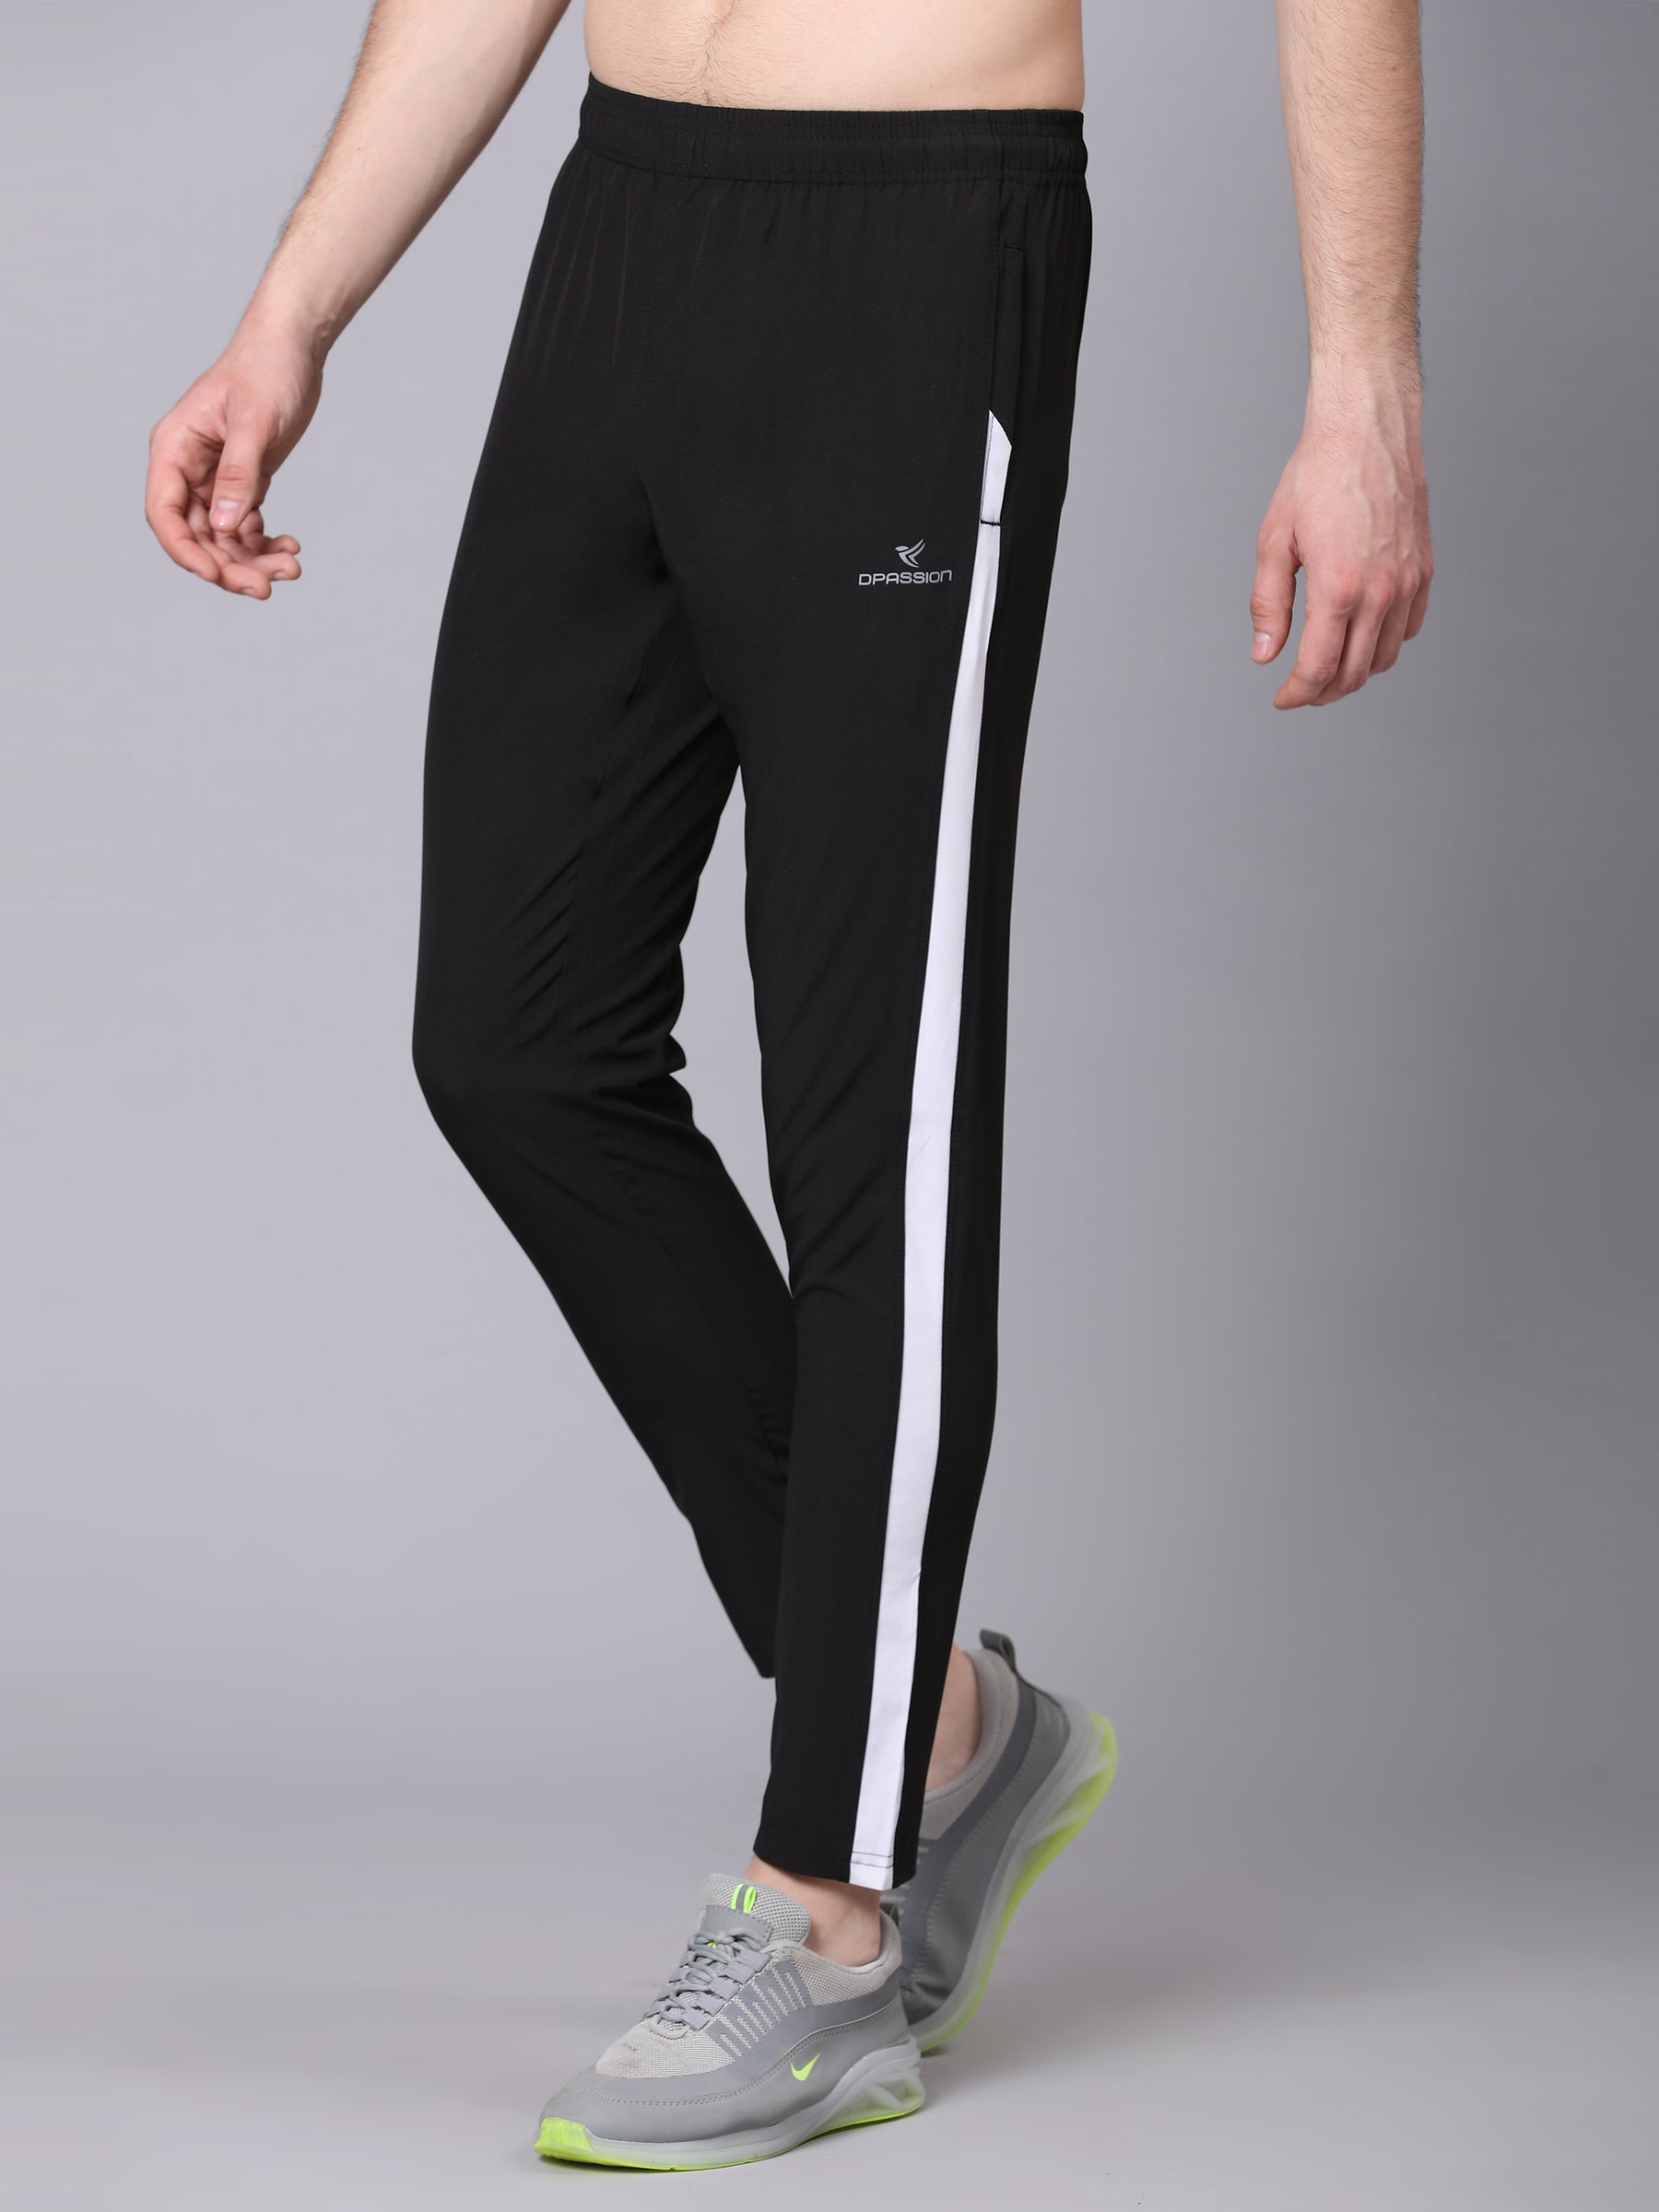 Gym Sweatpants Joggers Pants Men Casual Black Trousers Male Fitness Sport  Workout Cotton Track Pants Autumn Winter Sportswear